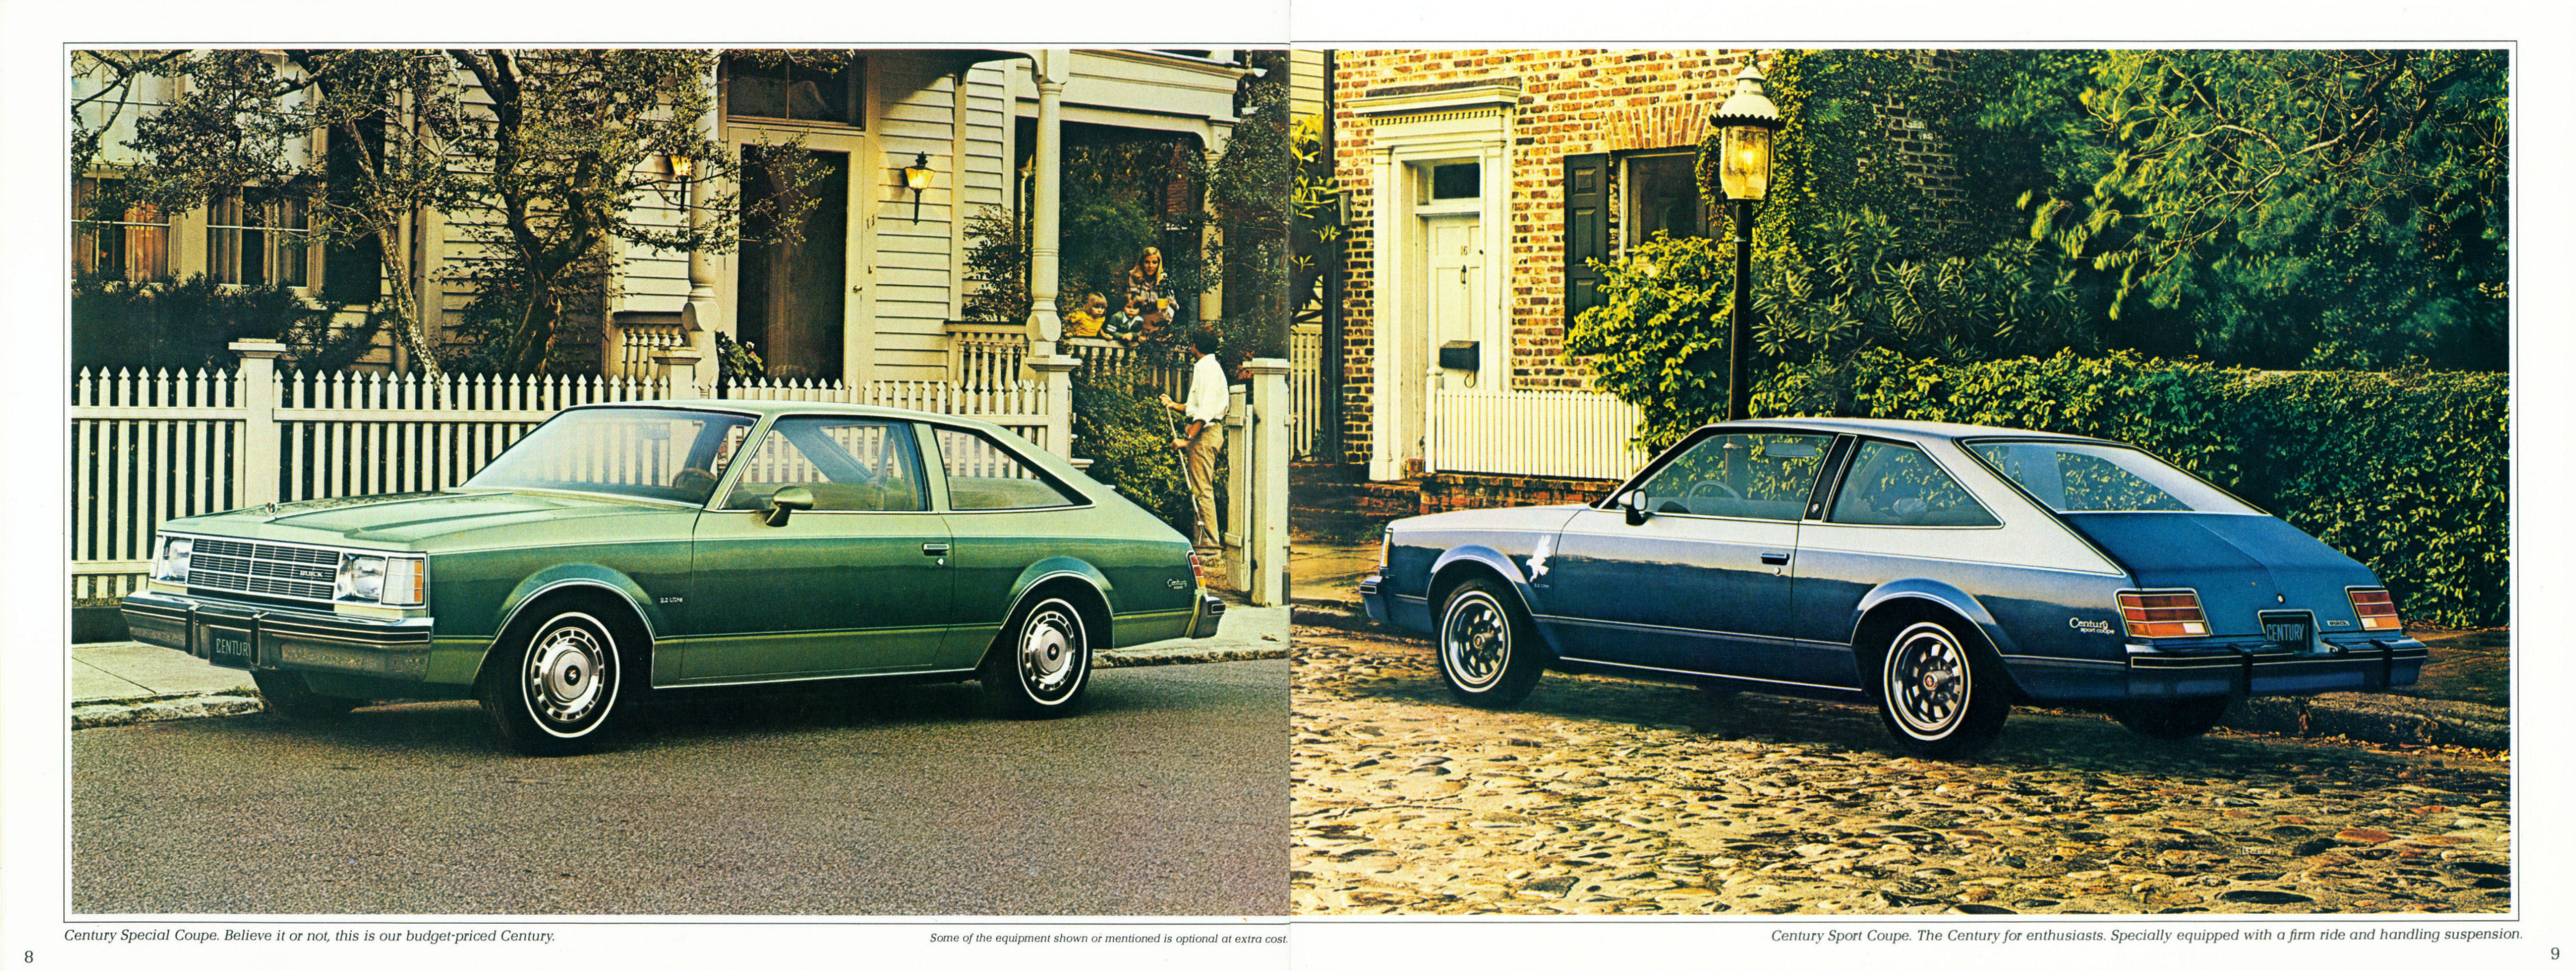 1978_Buick_Century-Regal_Cdn-08-09